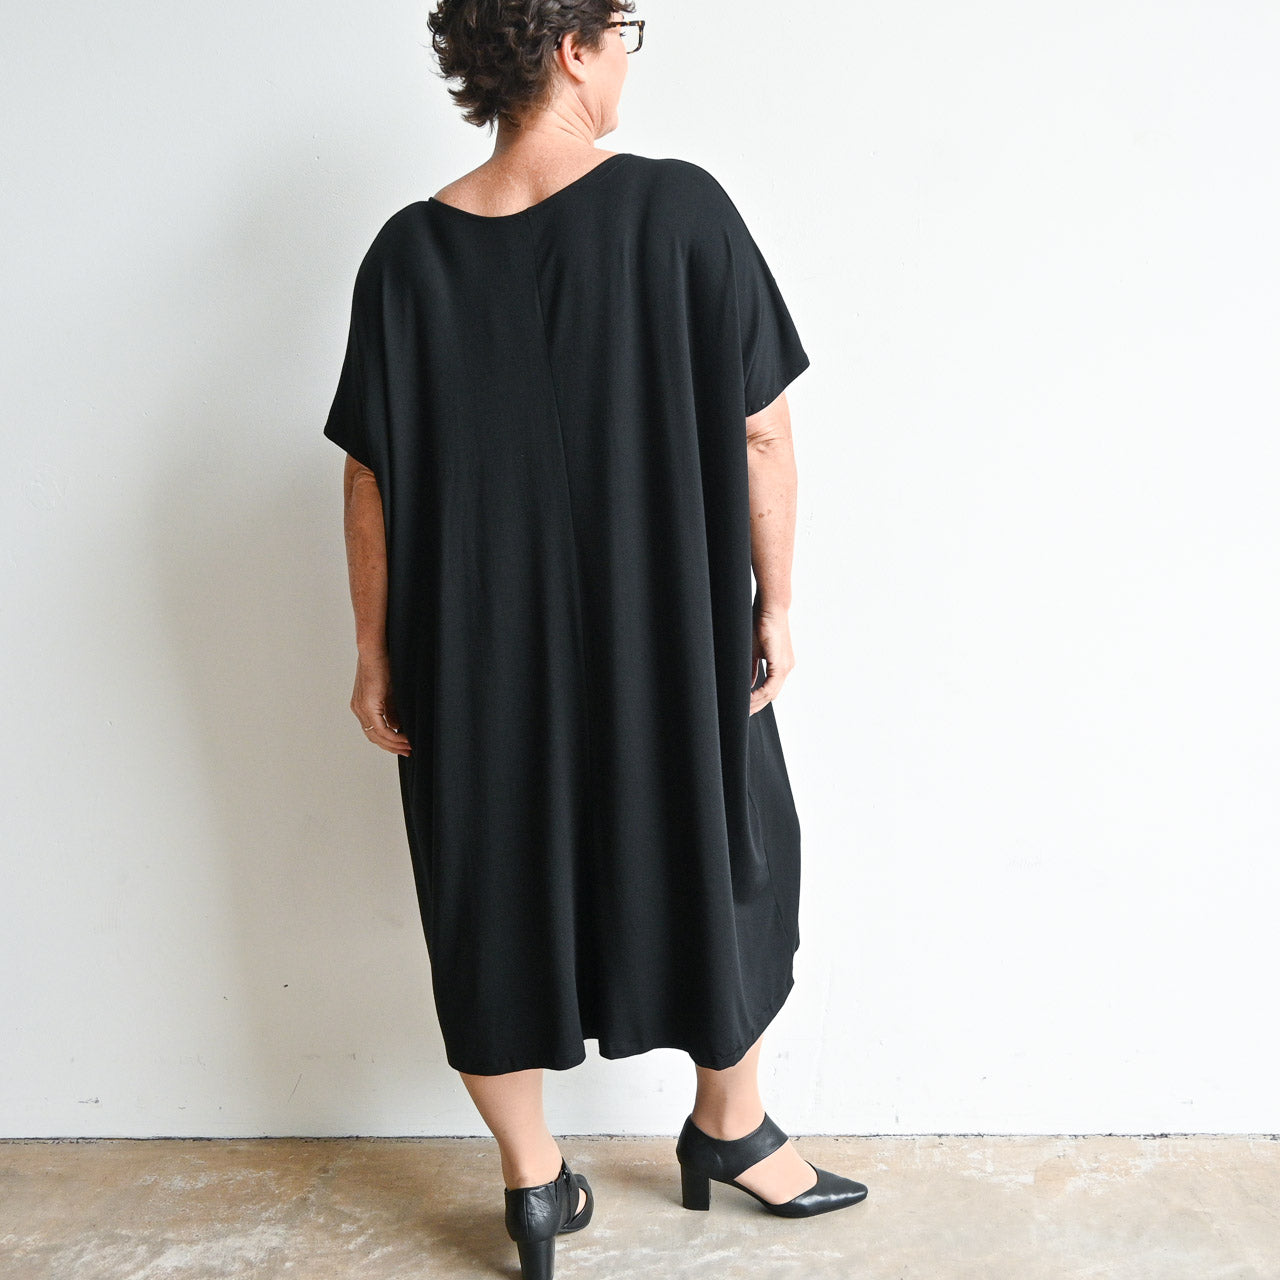 Find Your Flow Drape Dress by KOBOMO Bamboo - KOBOMO